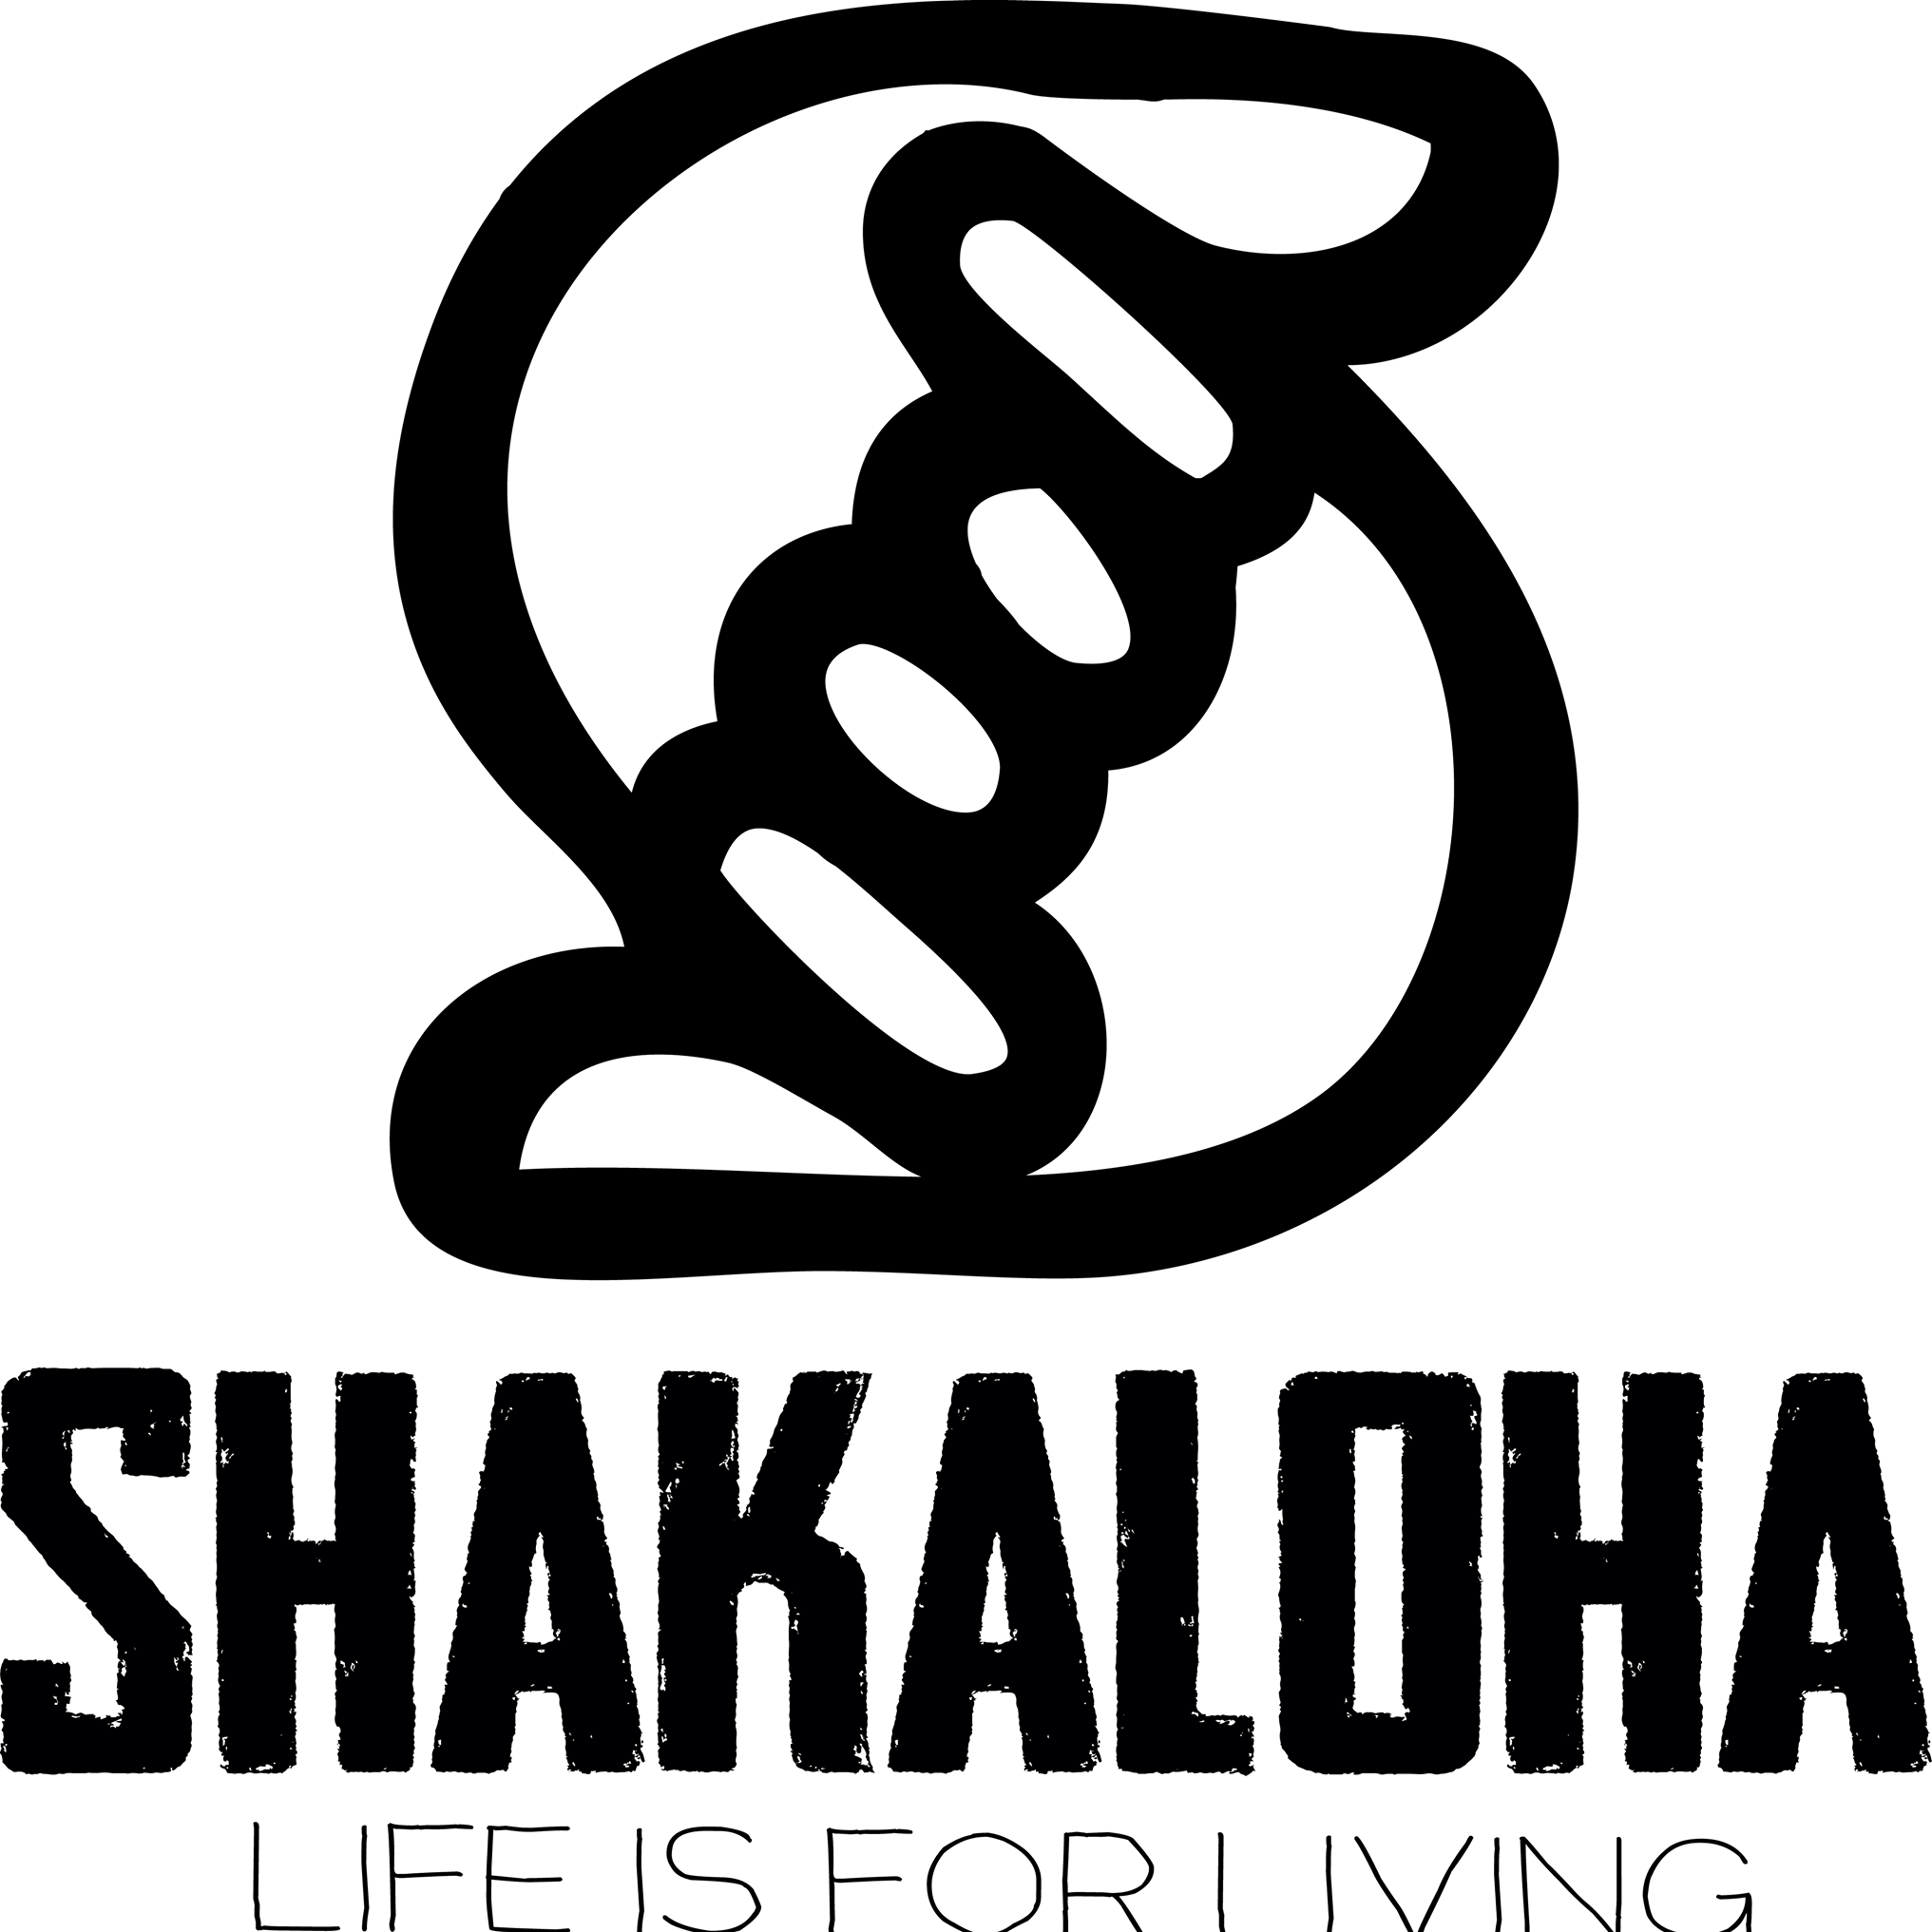 Shakaloha